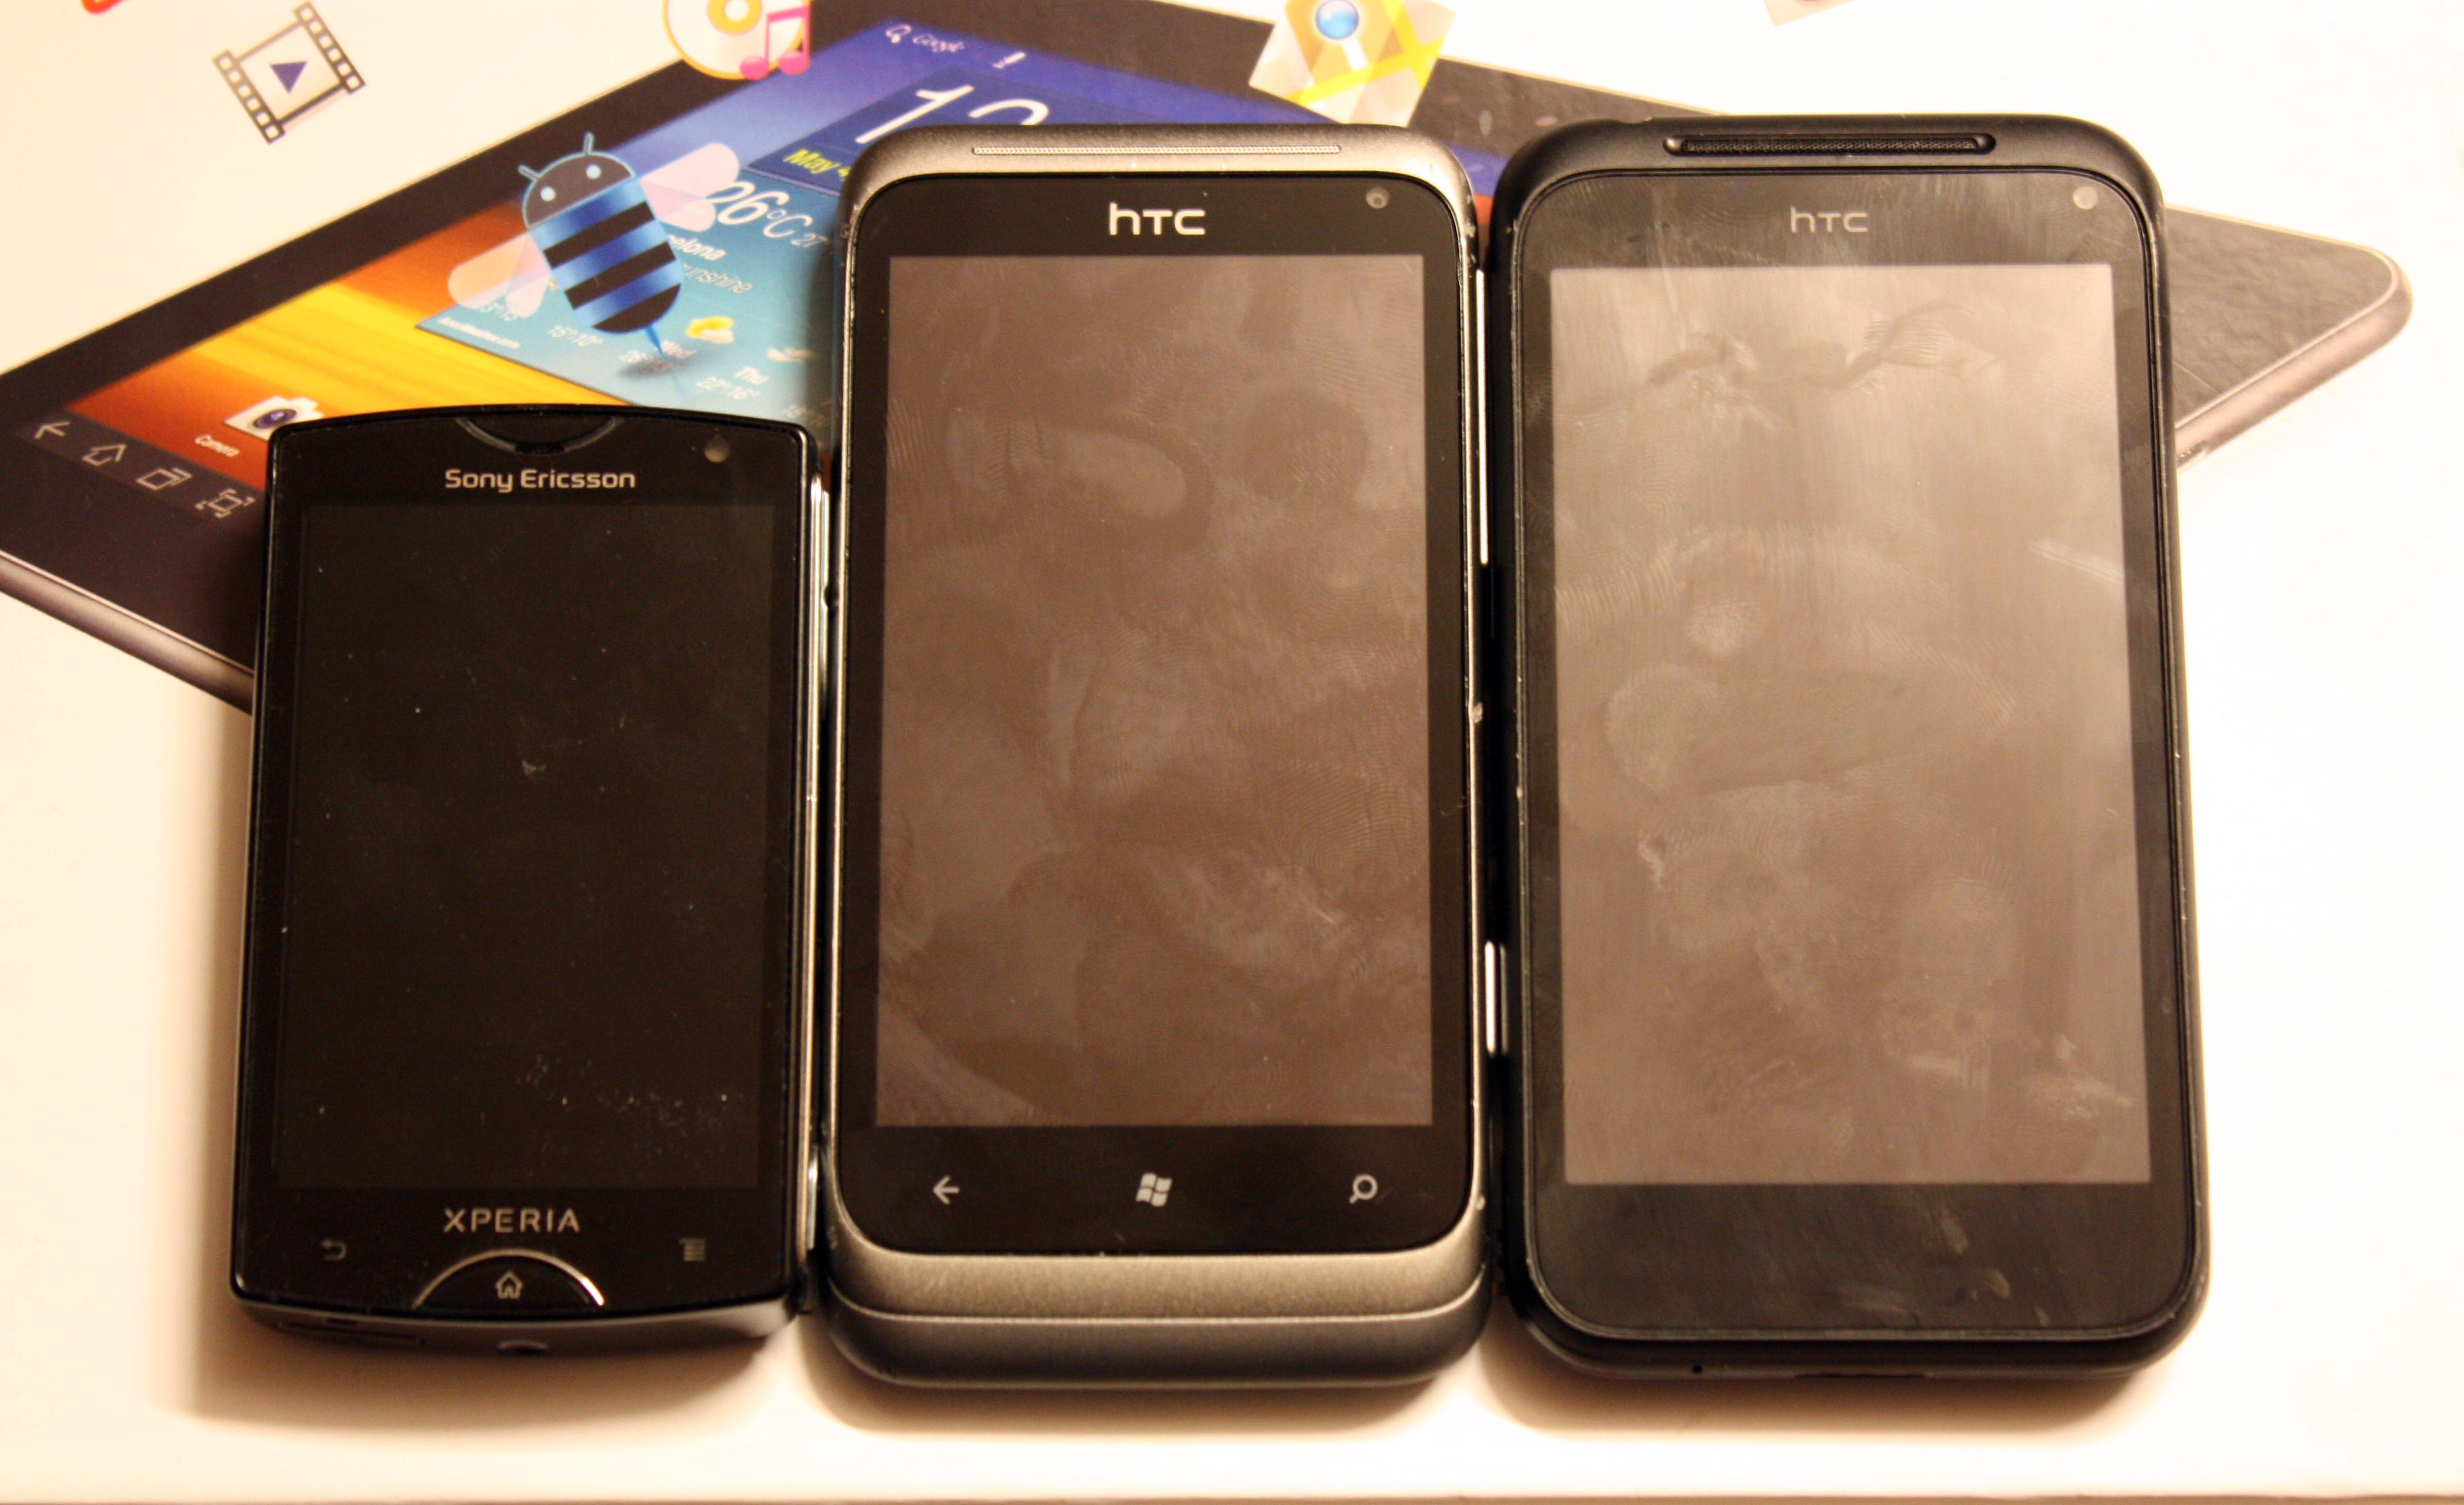 HTC Radar har en ganske normal størrelse. Her sammen med Sony Ericsson Xperia Mini og HTC Incredible S.